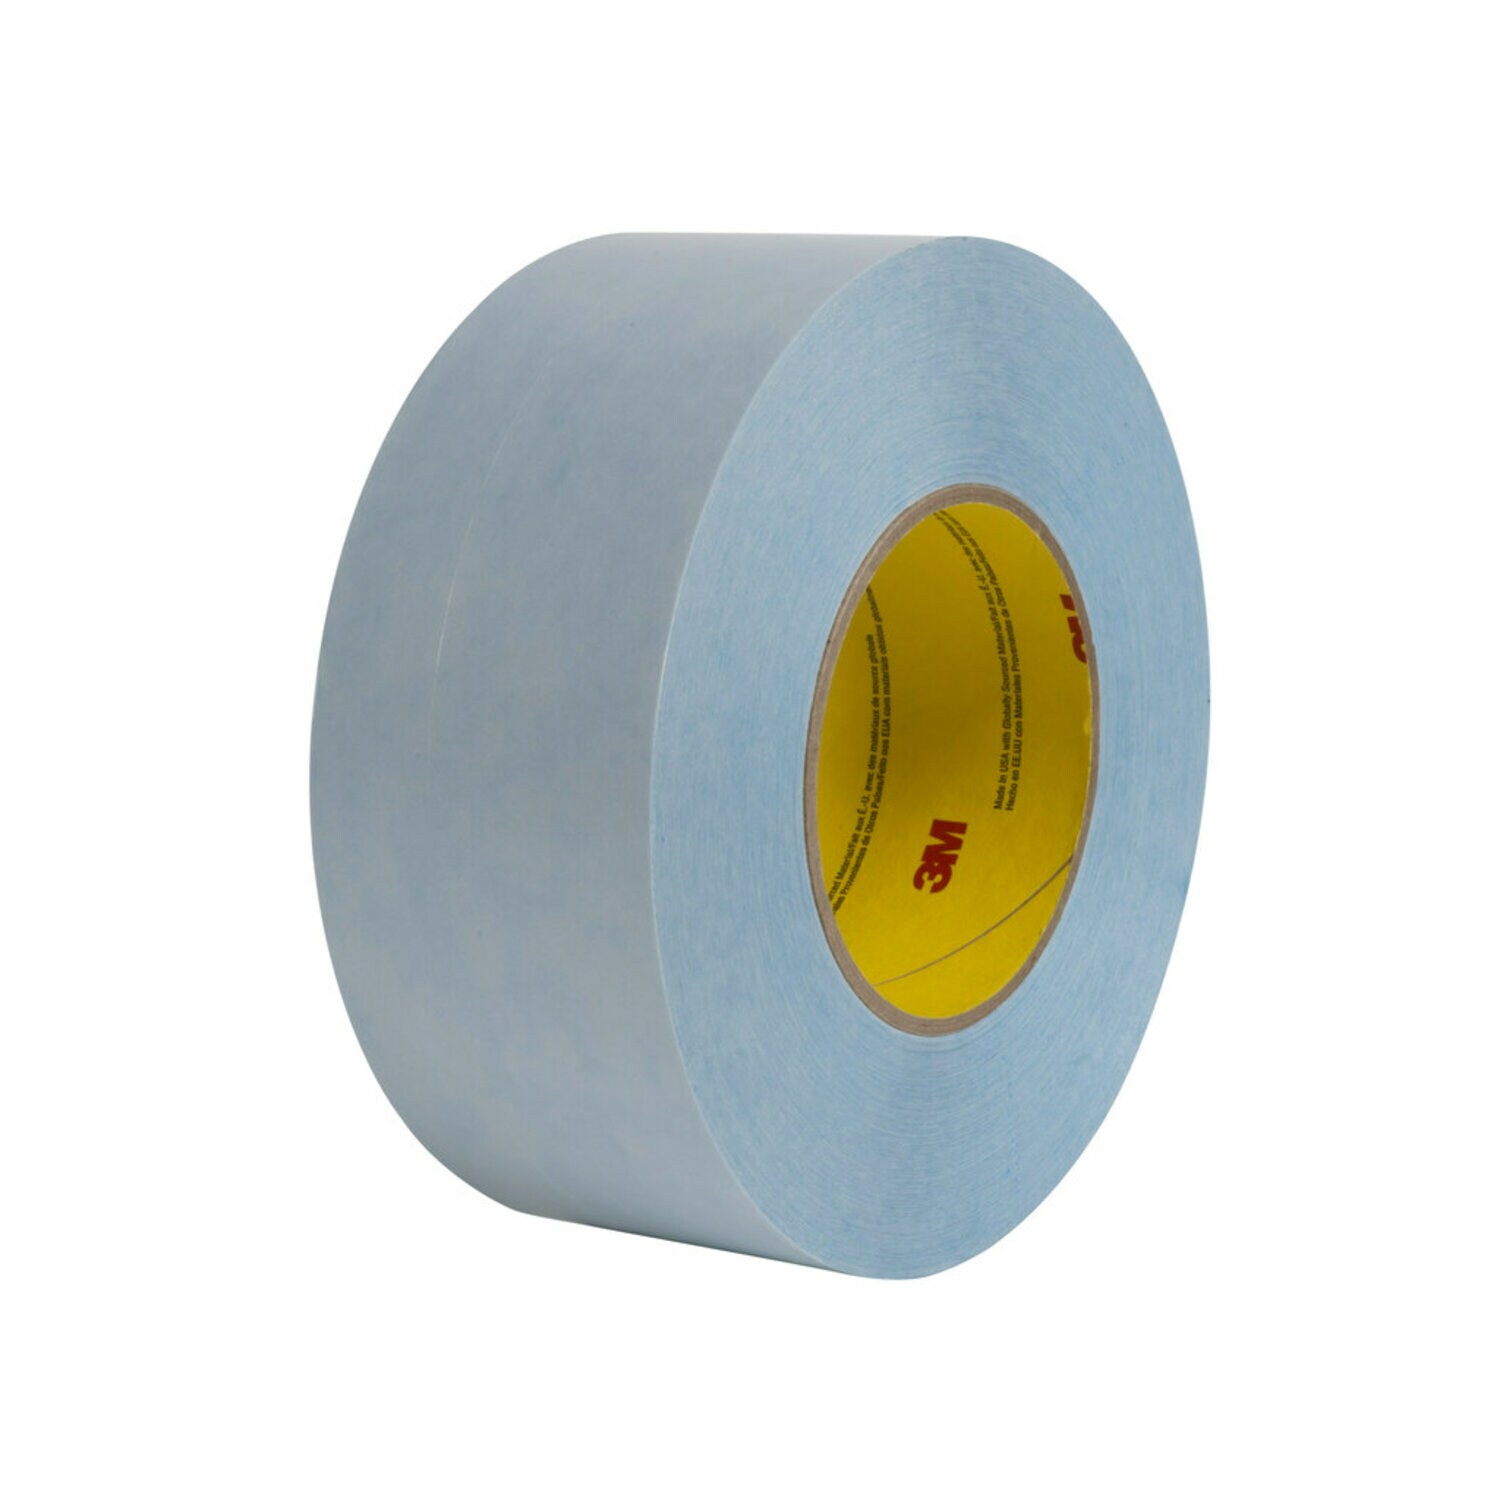 7100050484 - 3M Splittable Flying Splice Tape R3379, Blue, 75 mm x 55 m, 7.5 mil, 12
rolls per case